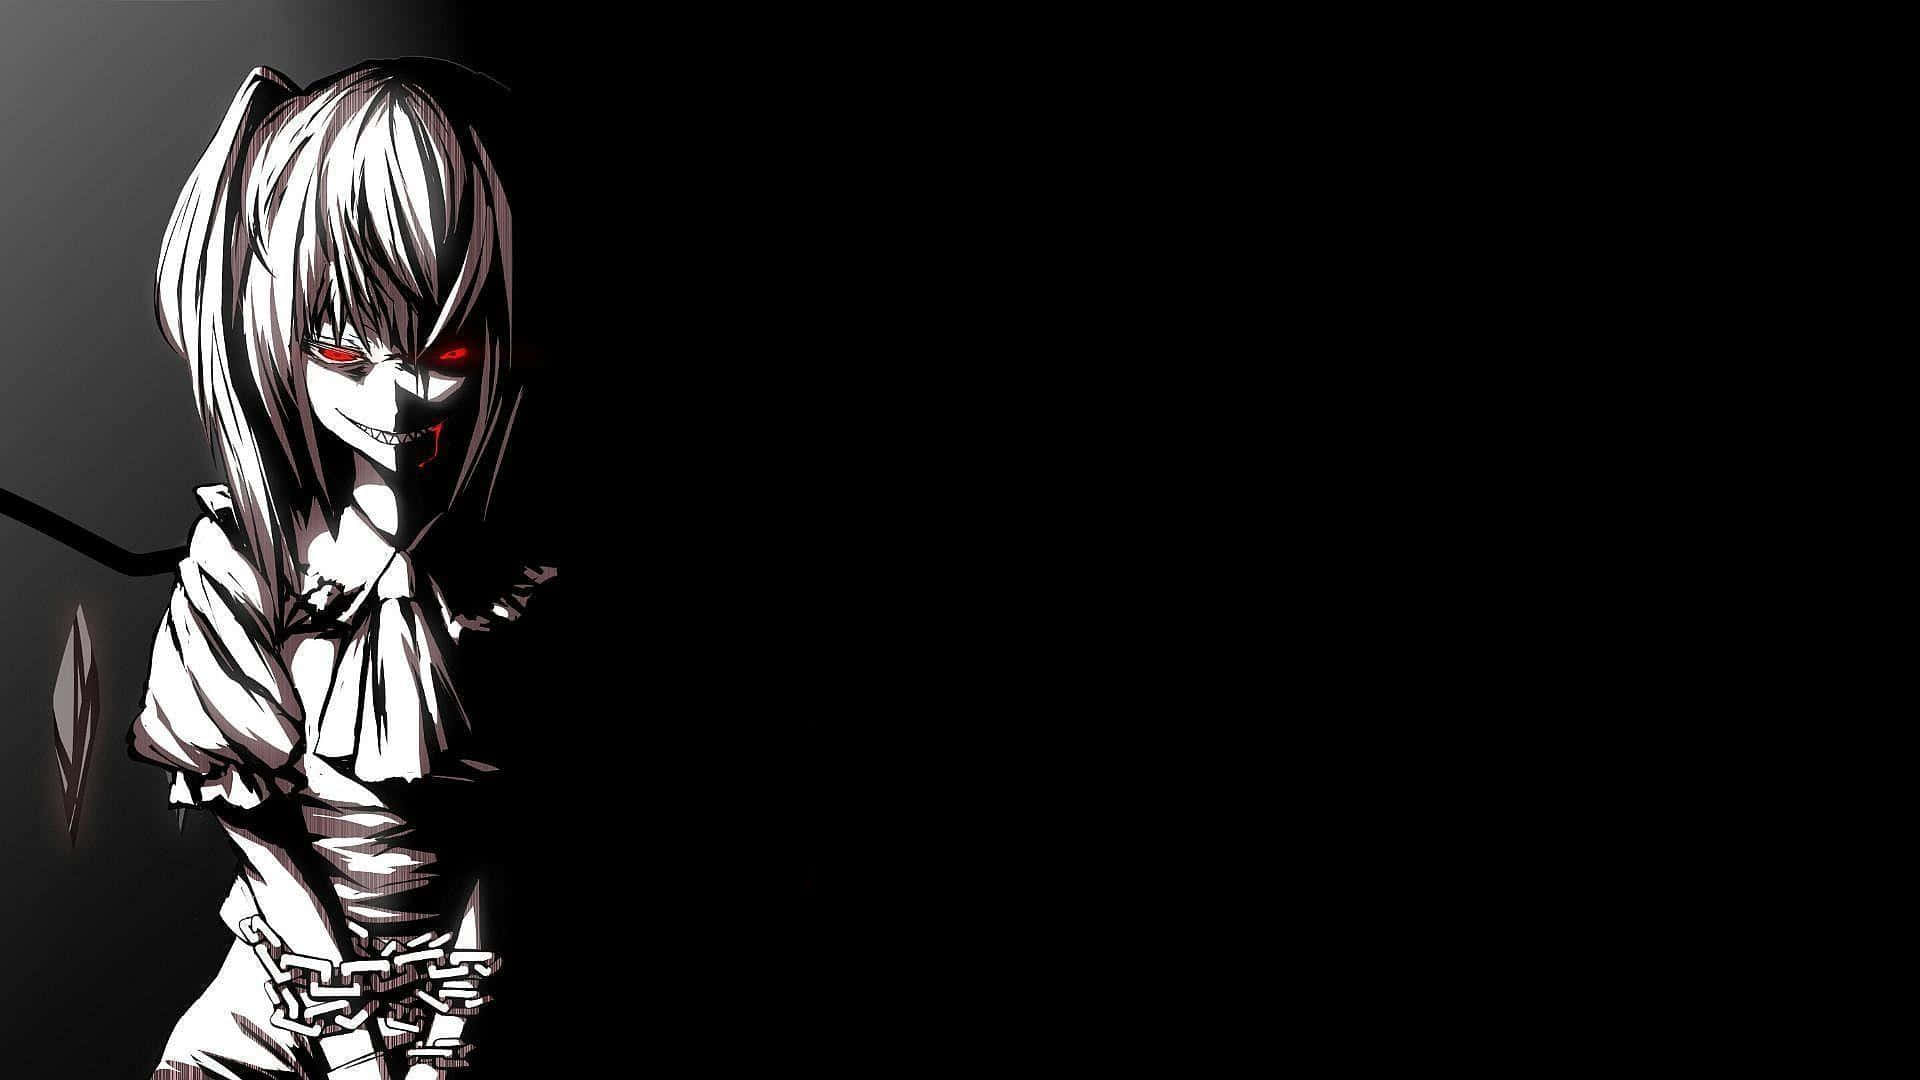 Mørk Anime Pige, Mystisk og Engagerende Wallpaper